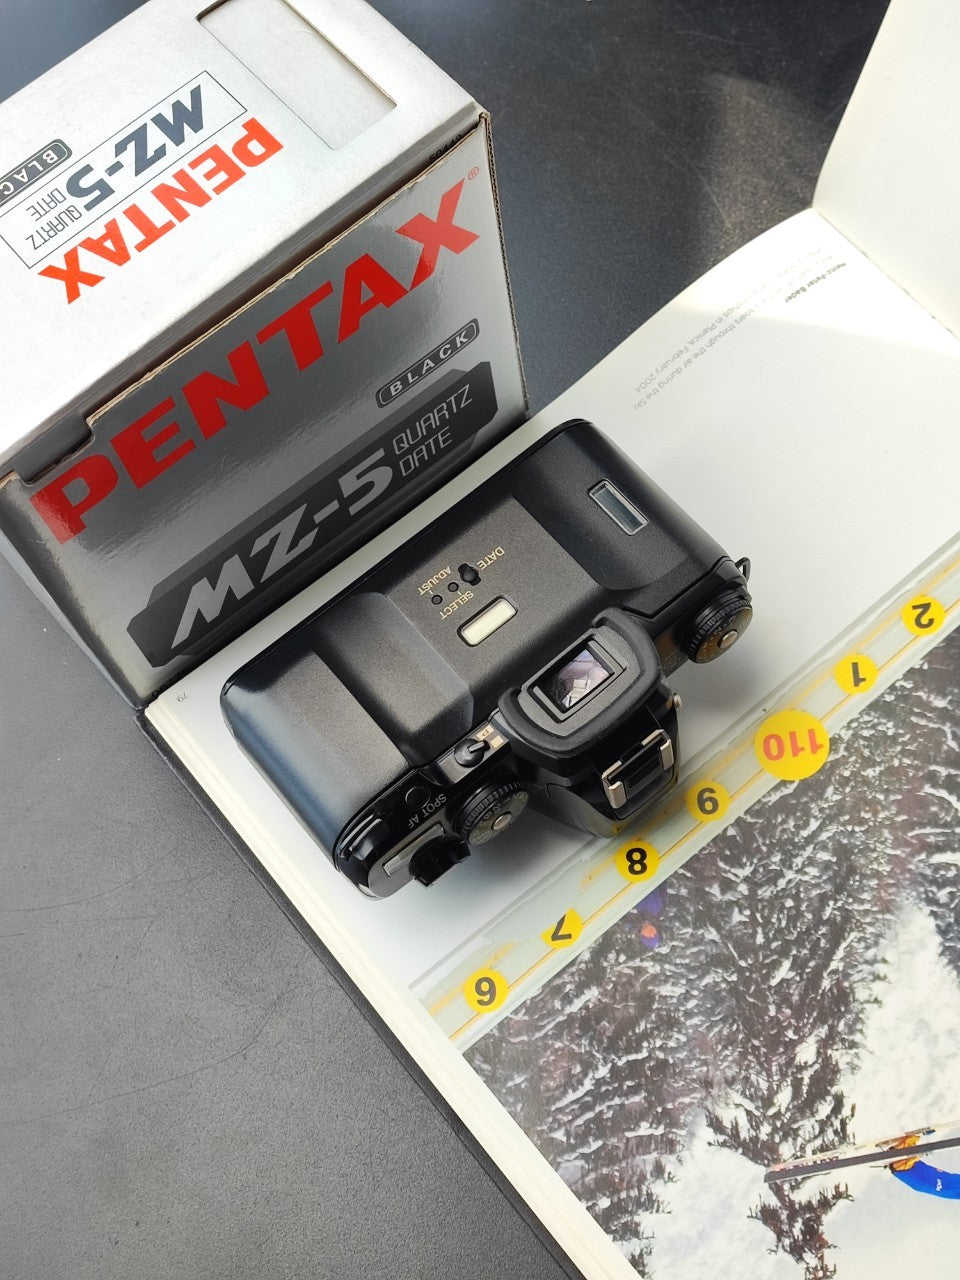 Pentax MZ-5 with box